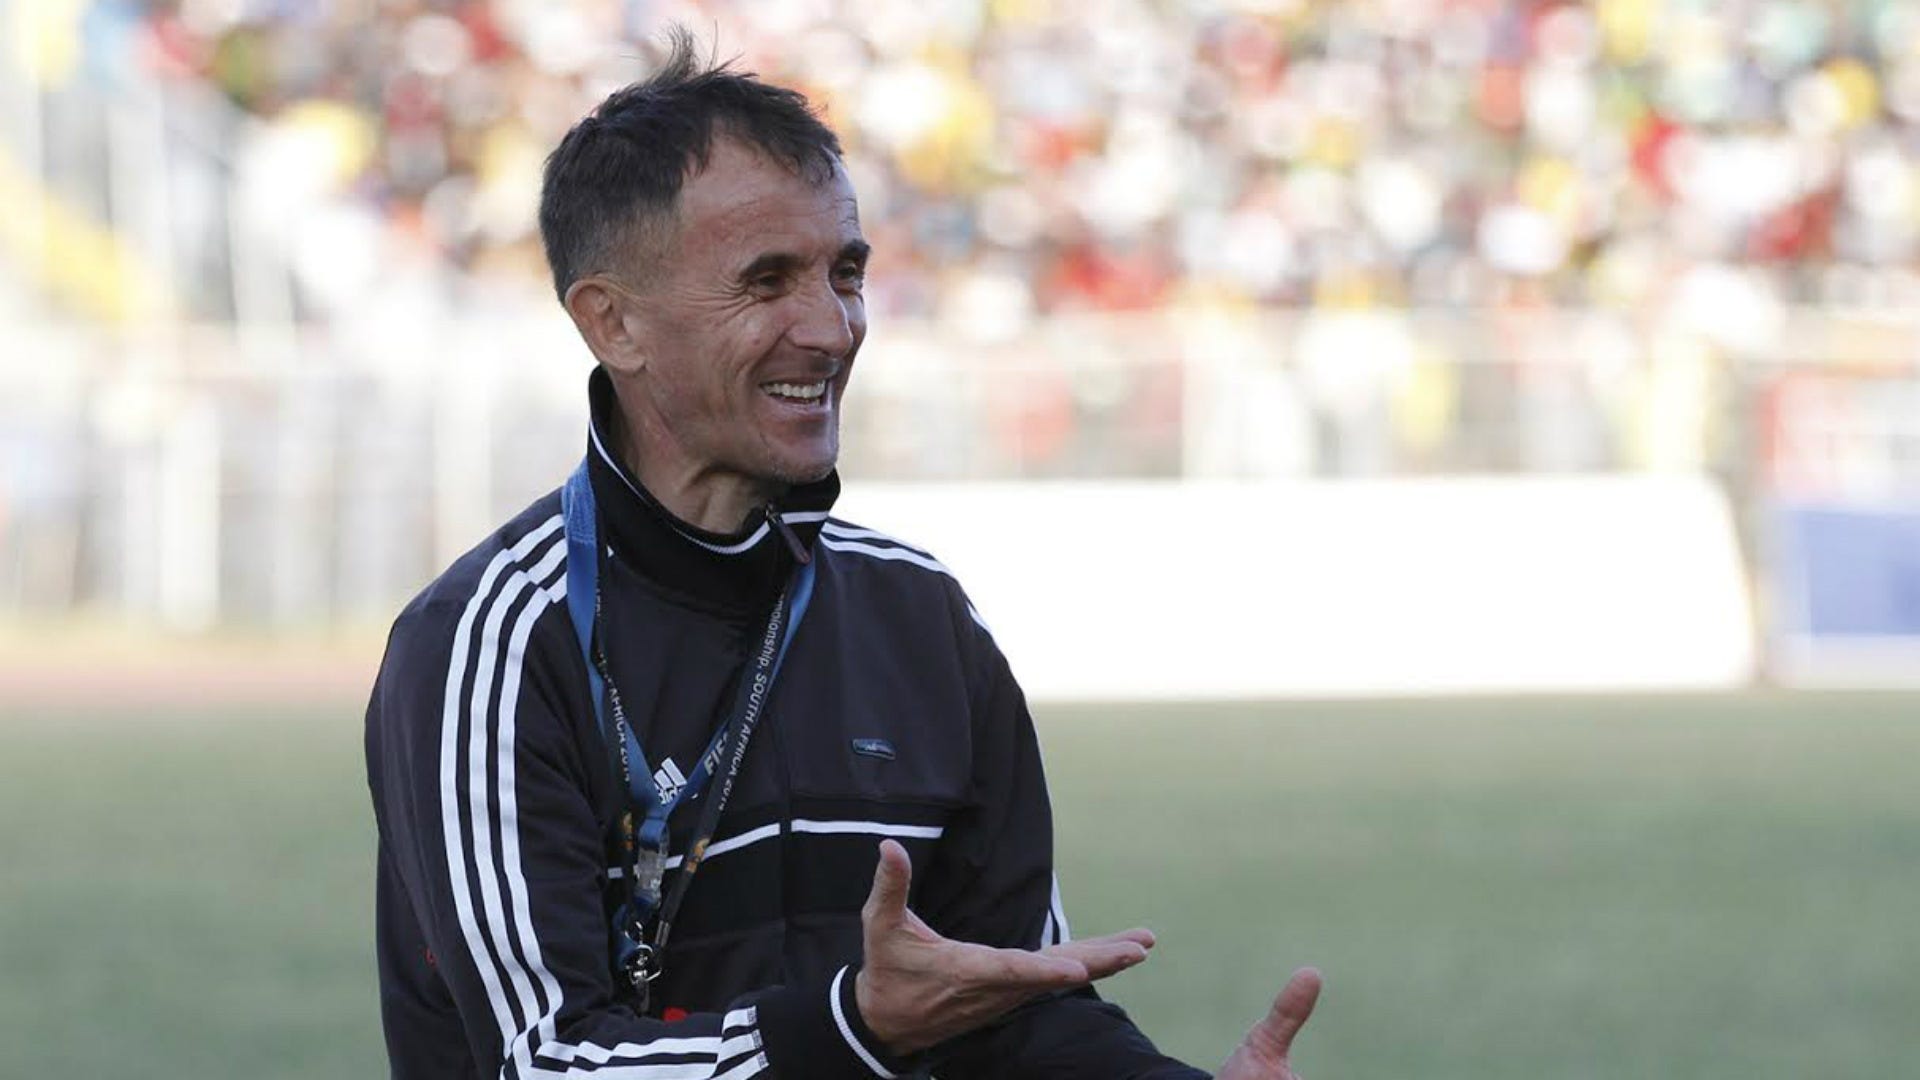 Uganda coach Micho Sredojevic in past action